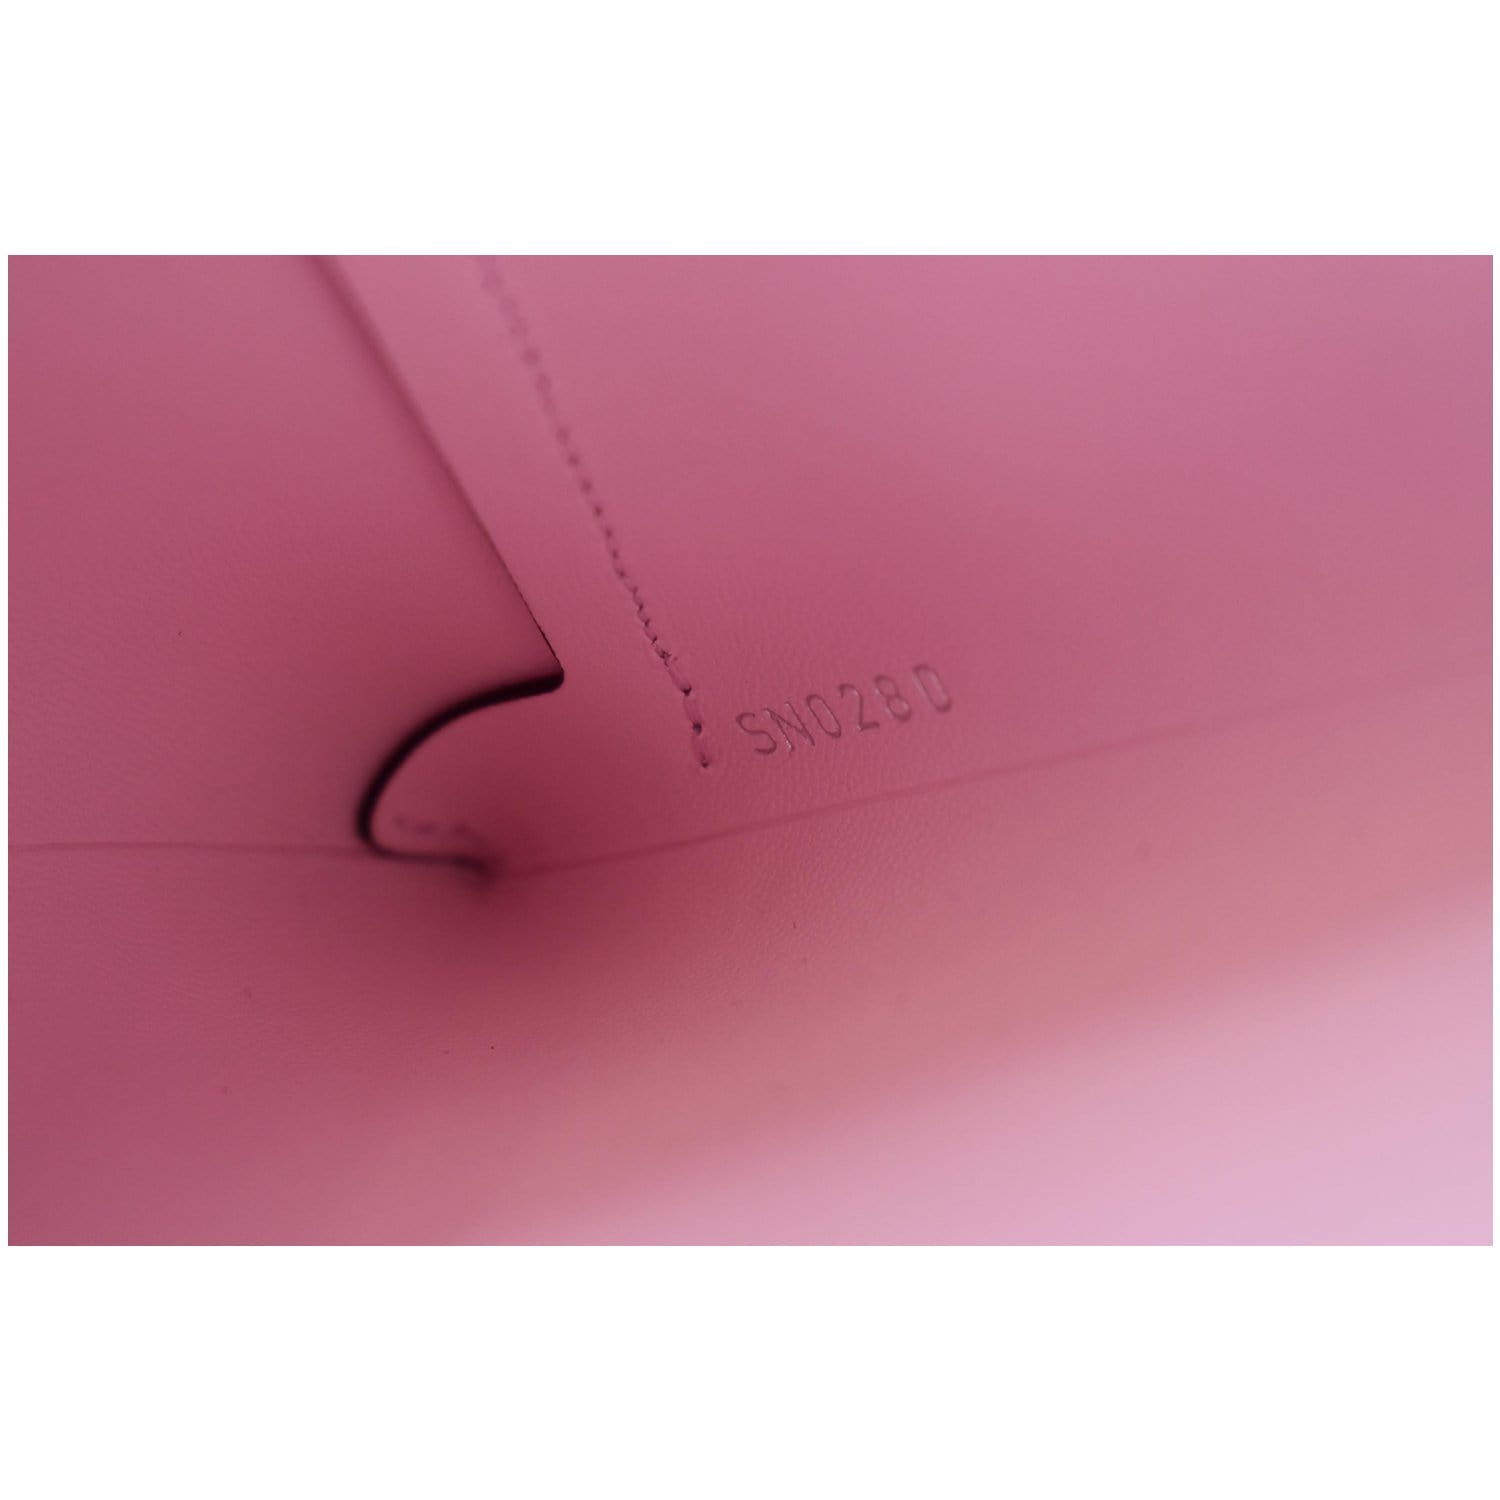 Shop Louis Vuitton MONOGRAM Kirigami pochette (M81176) by attrayant